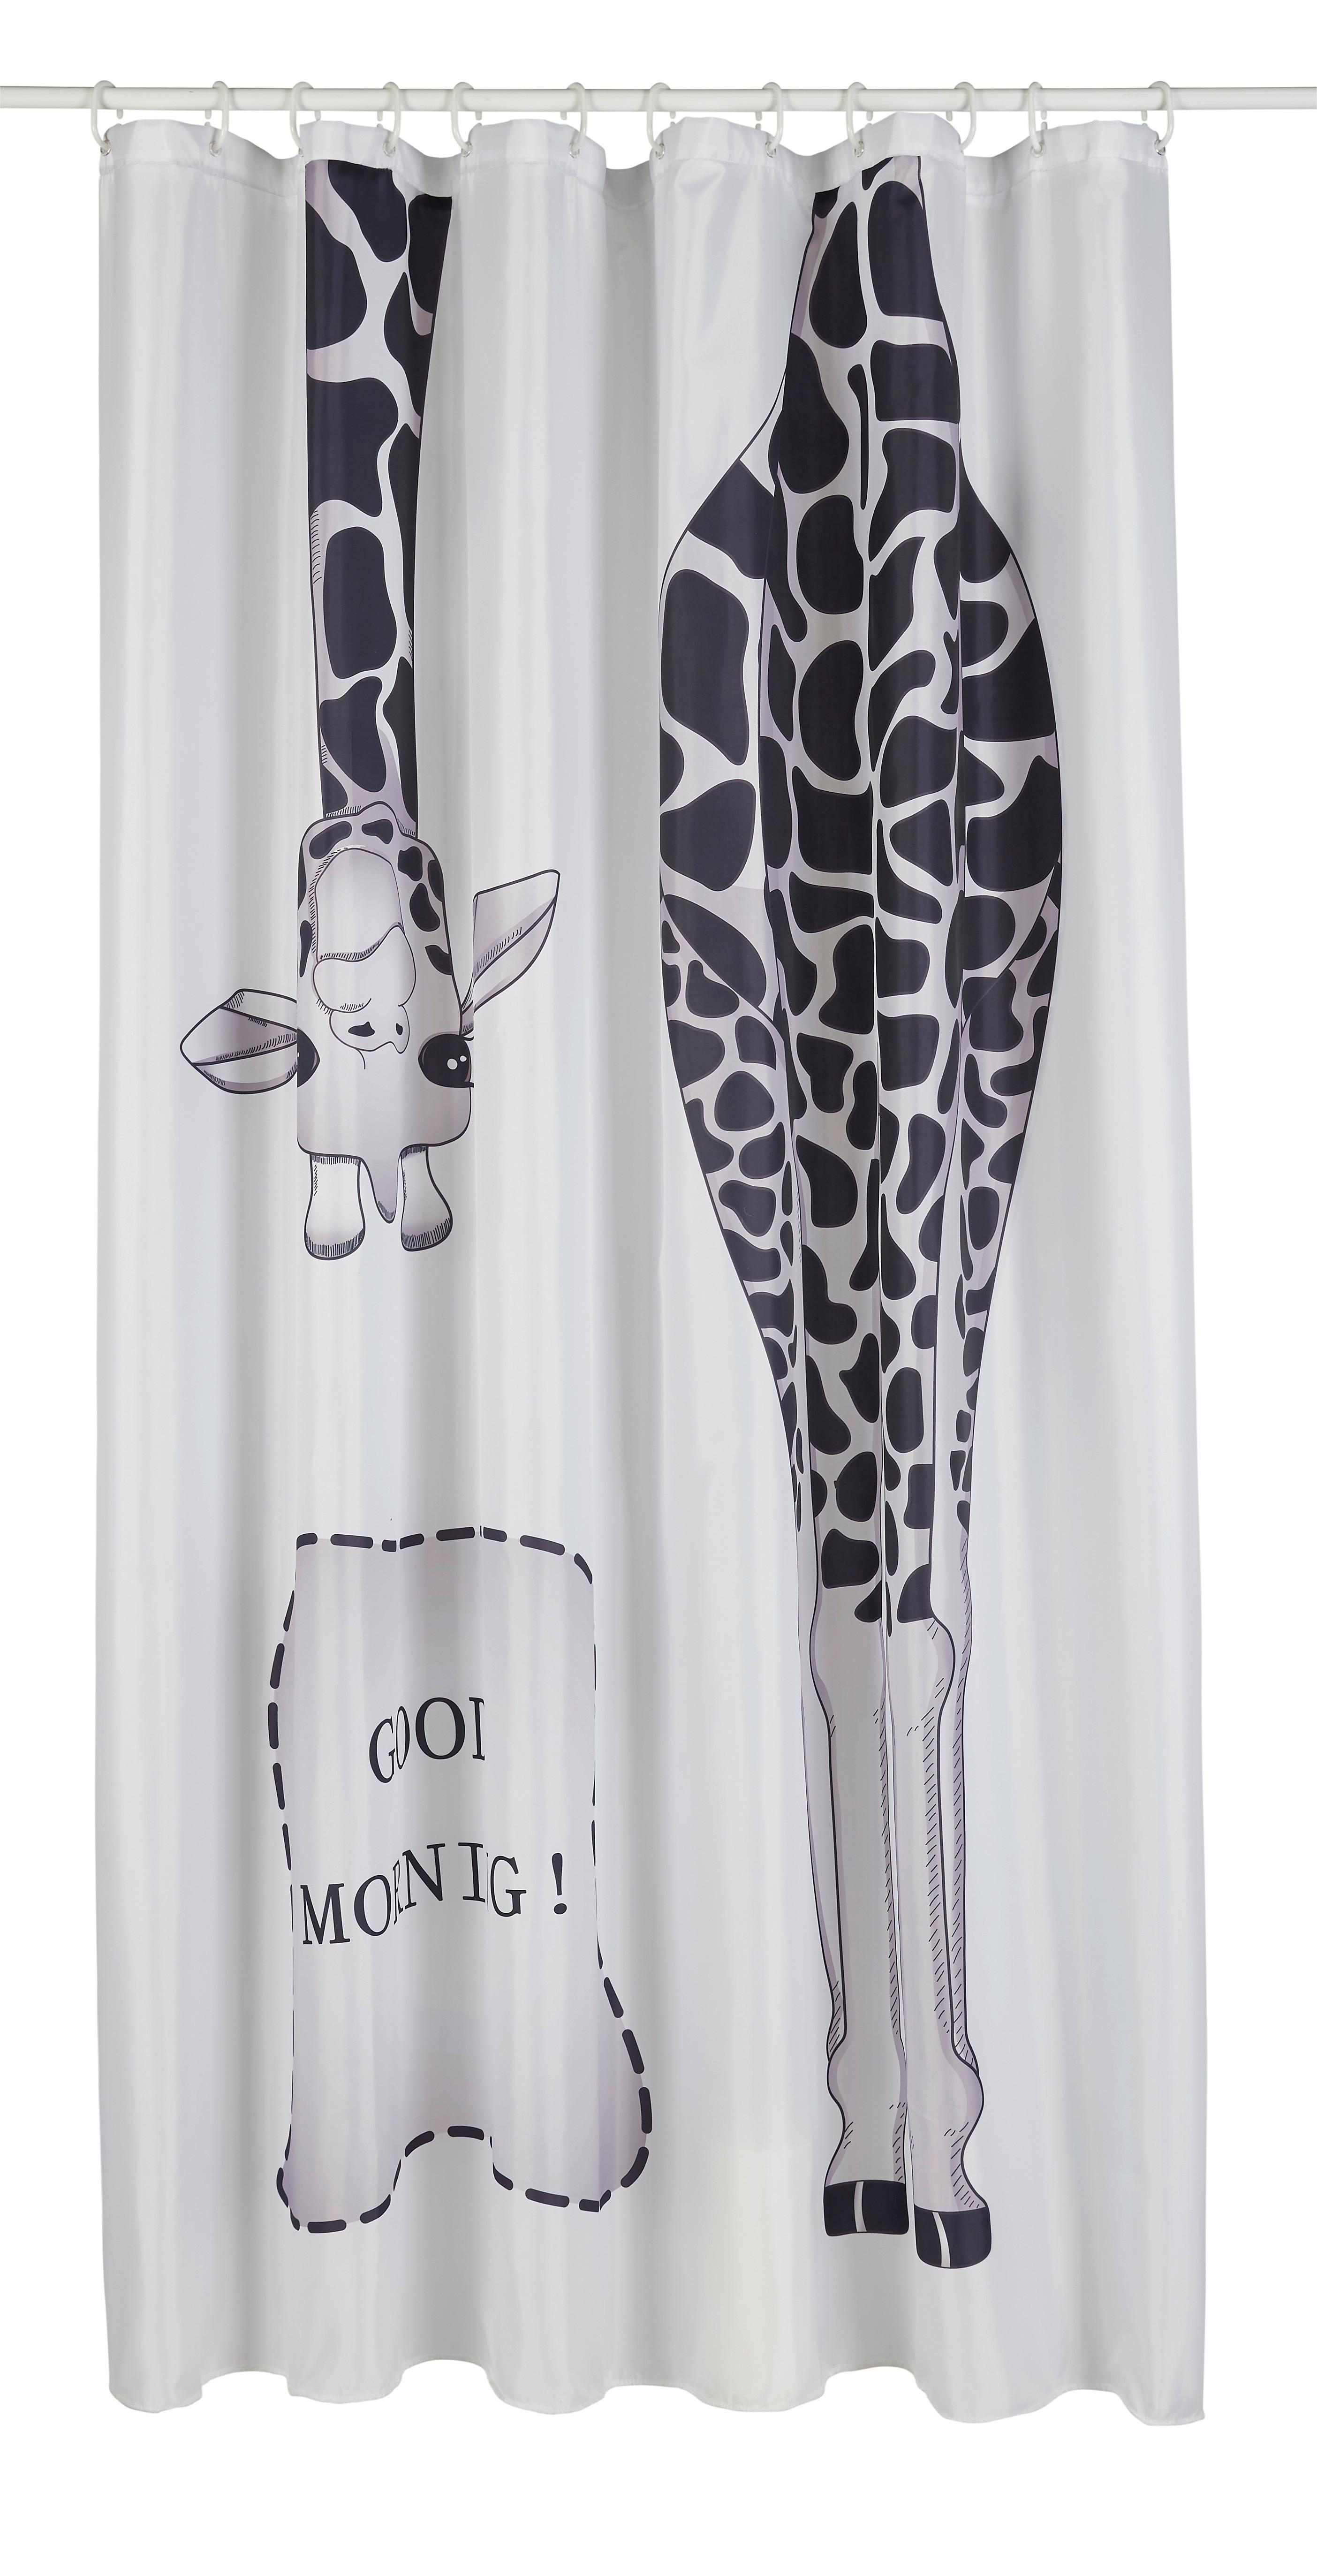 Duschvorhang Giraffe in Grau ca. 180x200cm - Weiß/Grau, Textil (180/200cm) - Modern Living